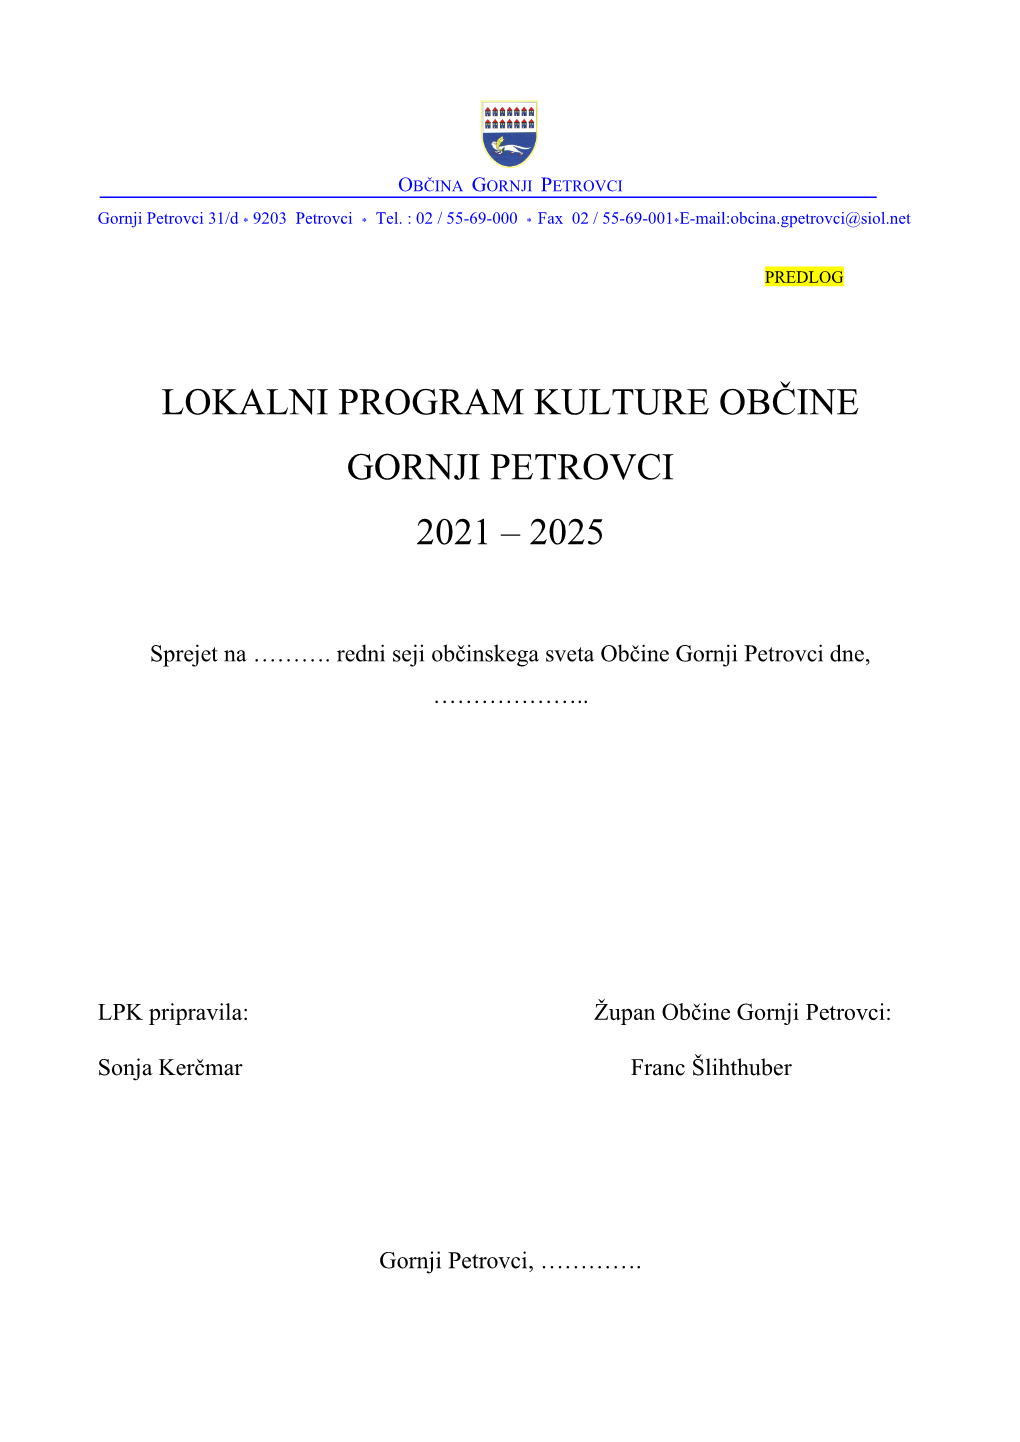 Lokalni Program Kulture Občine Gornji Petrovci 2021 – 2025